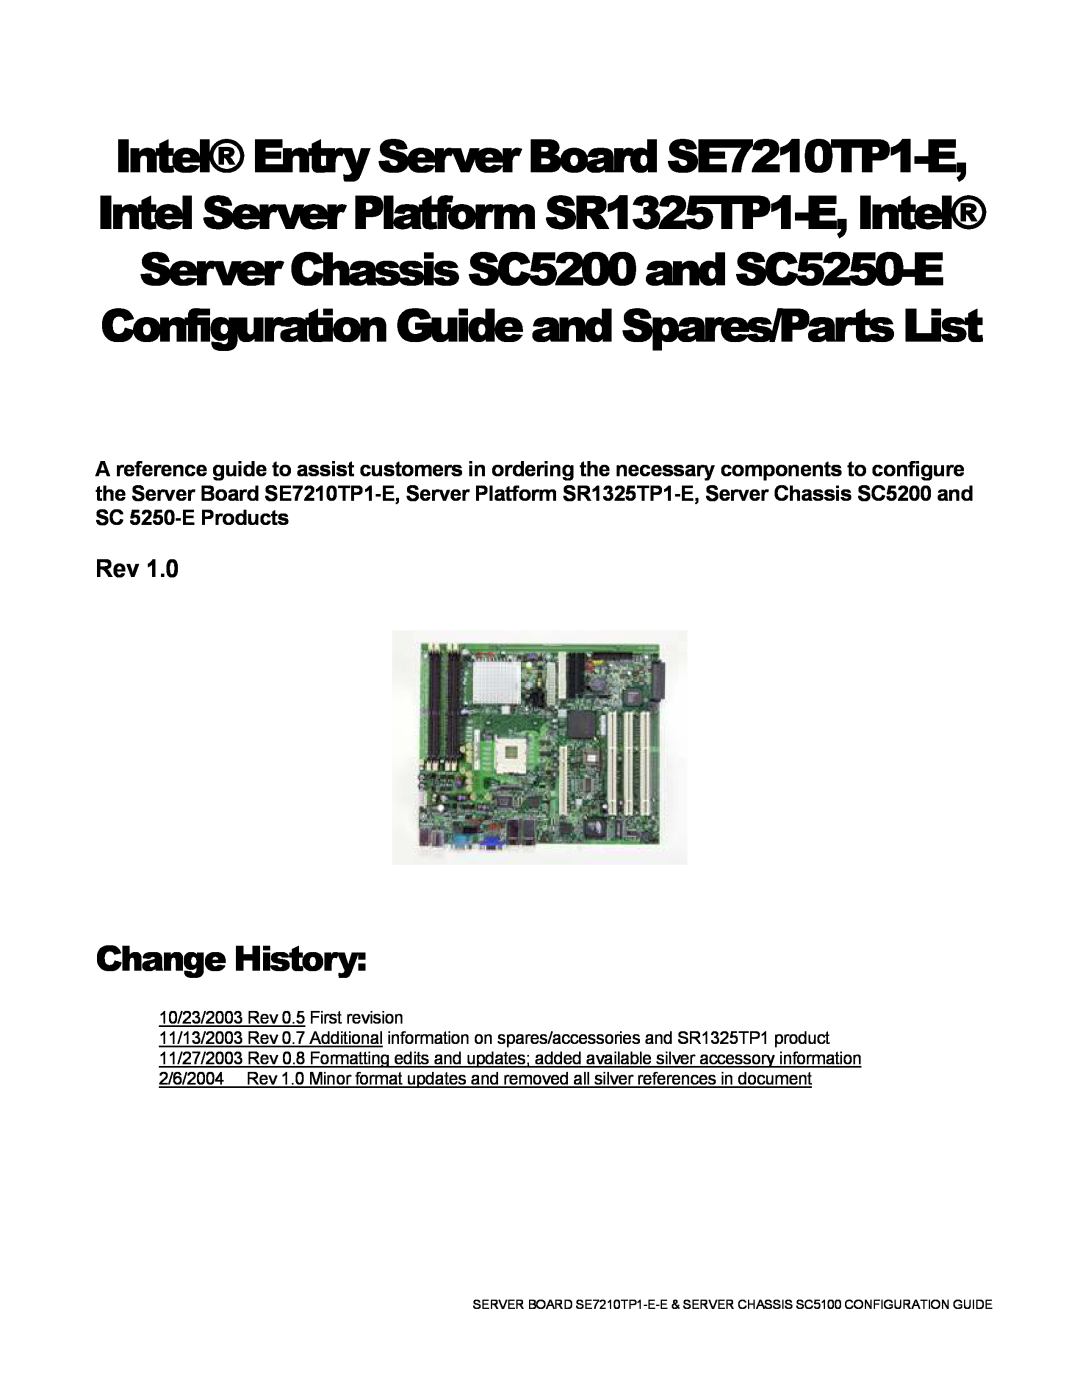 Intel SR1325TP1-E manual Change History, Server Chassis SC5200 and SC5250-E, Intel Entry Server Board SE7210TP1-E 